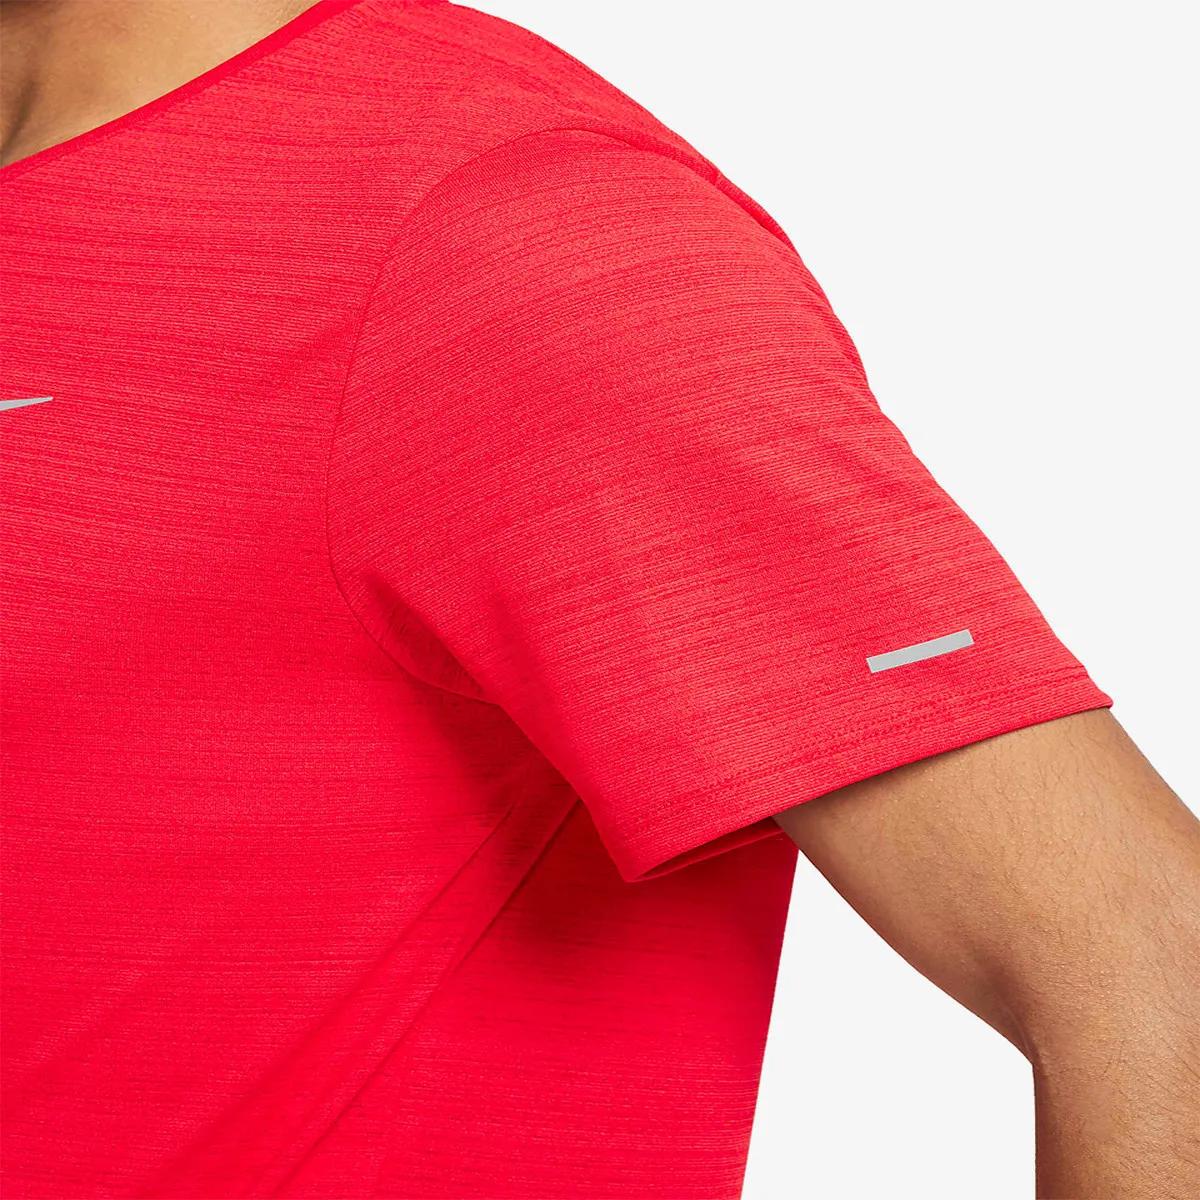 Nike Tricou DRI-FIT MILER 